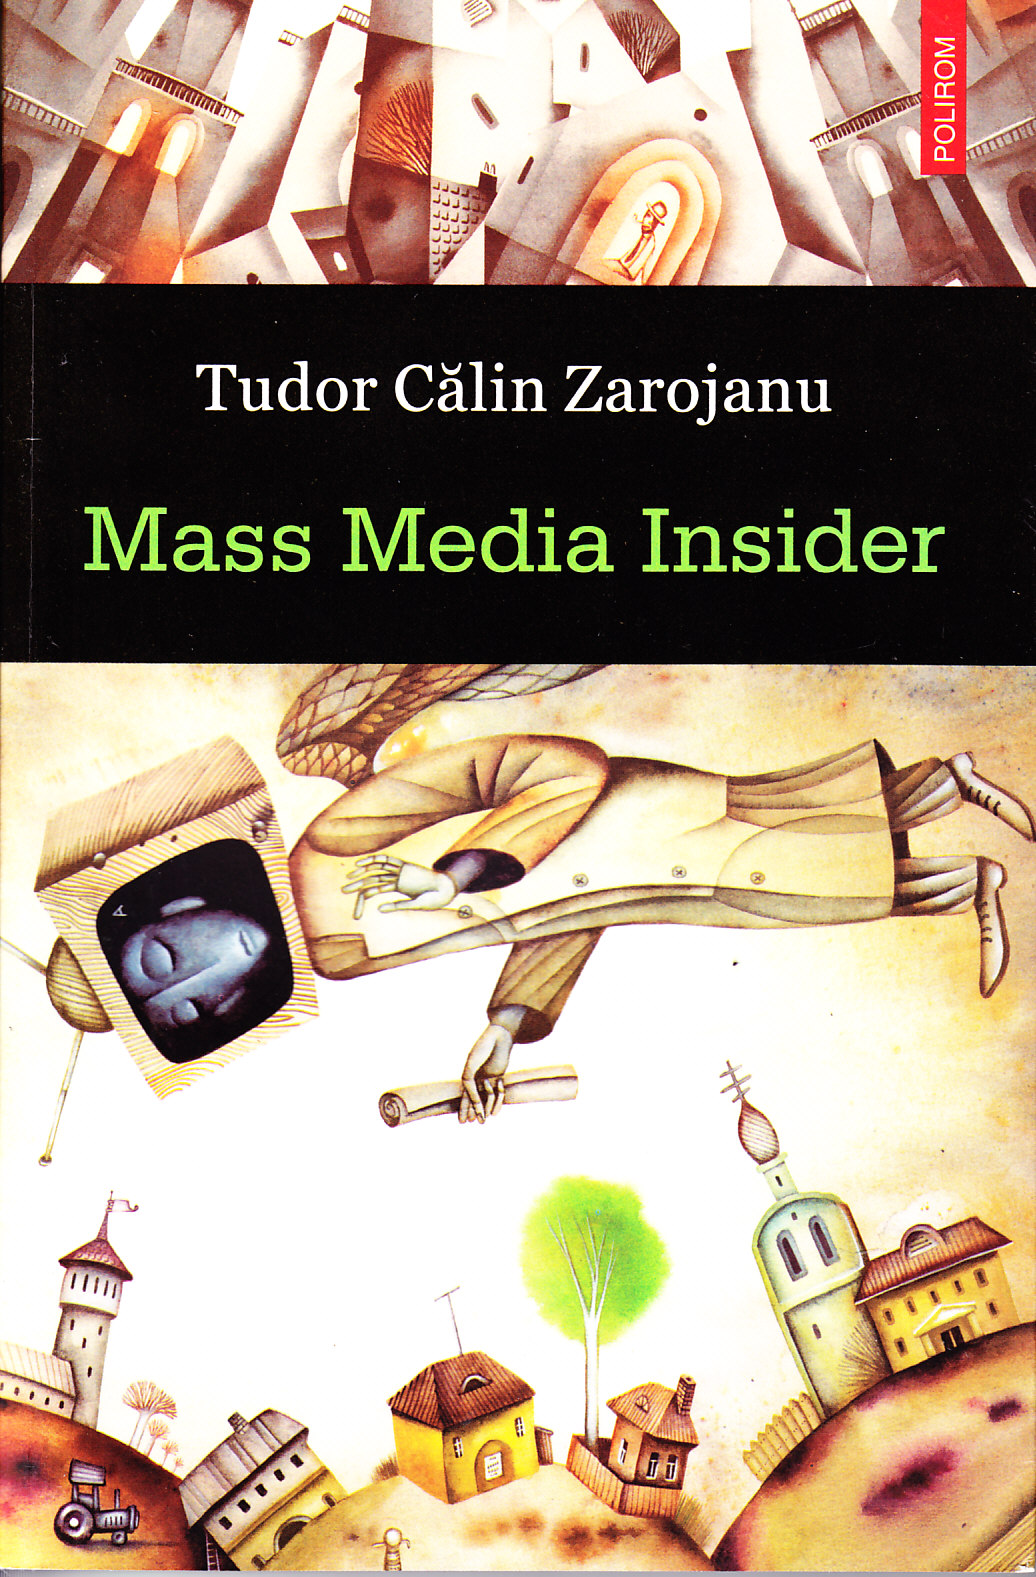 Mass media insider - Tudor Calin Zarojanu